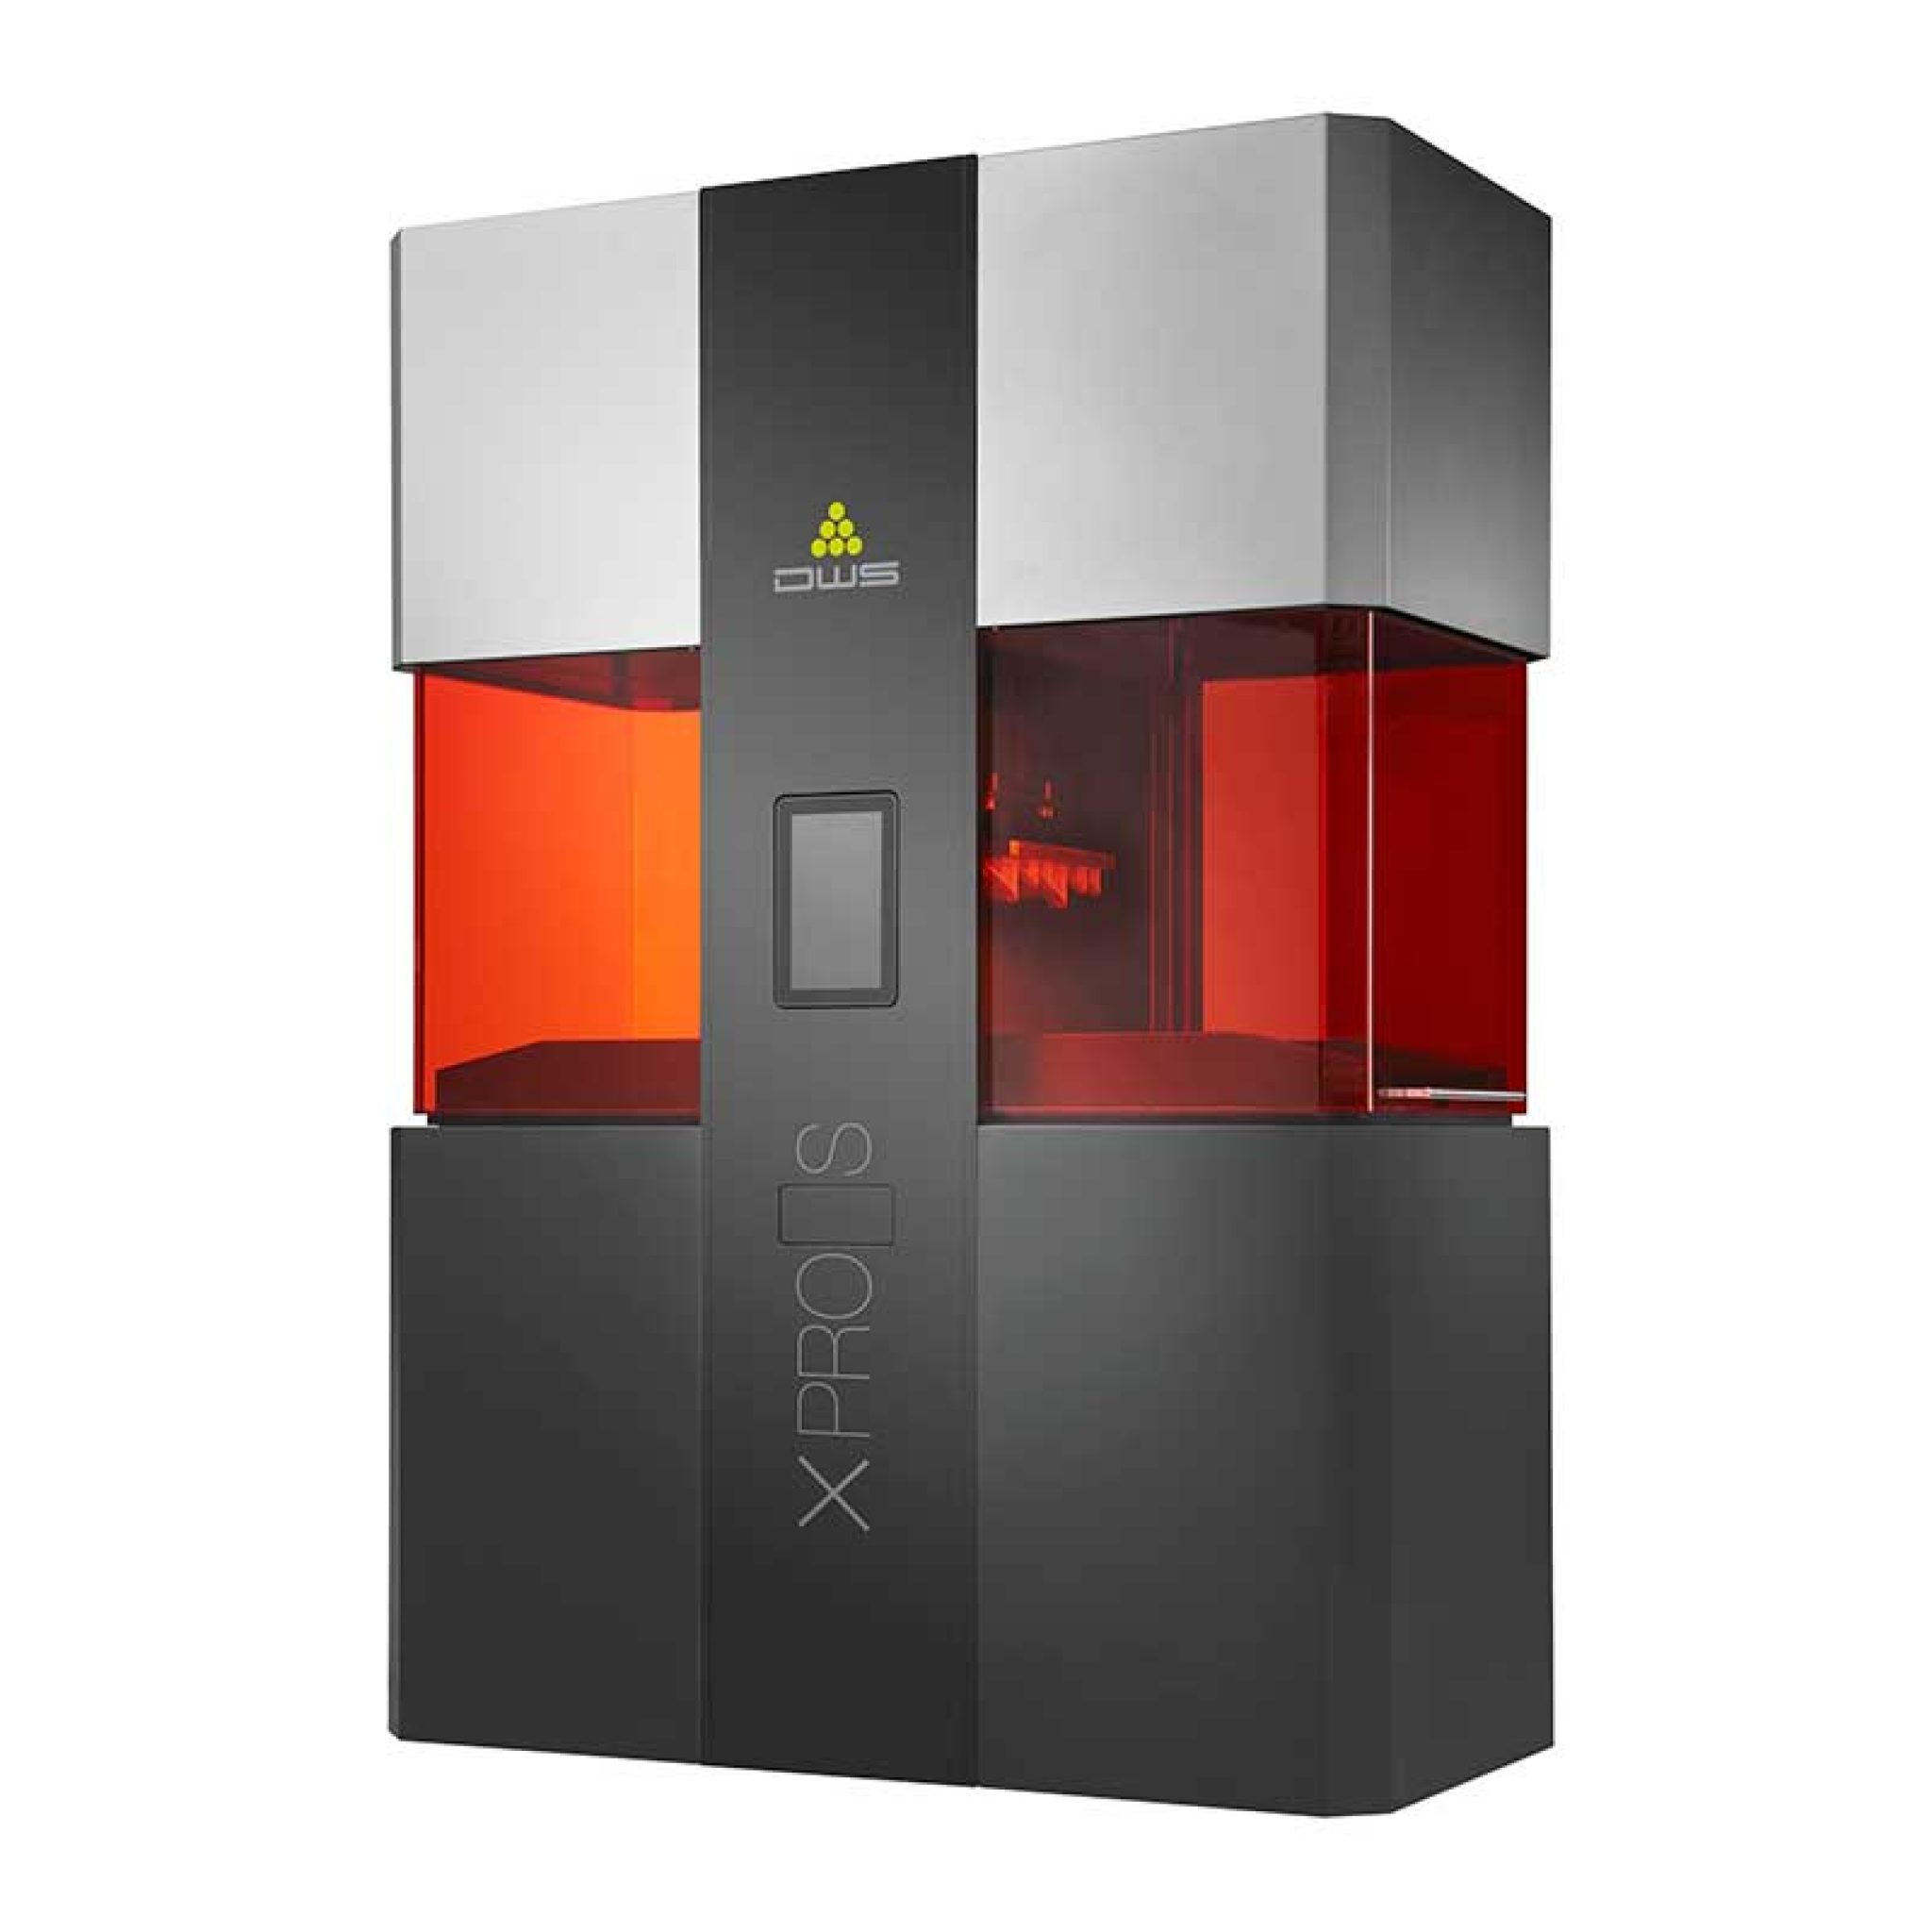 2021 Best Large Resin 3D Printer - DWS X Pro S 3D Printer 2048x2048